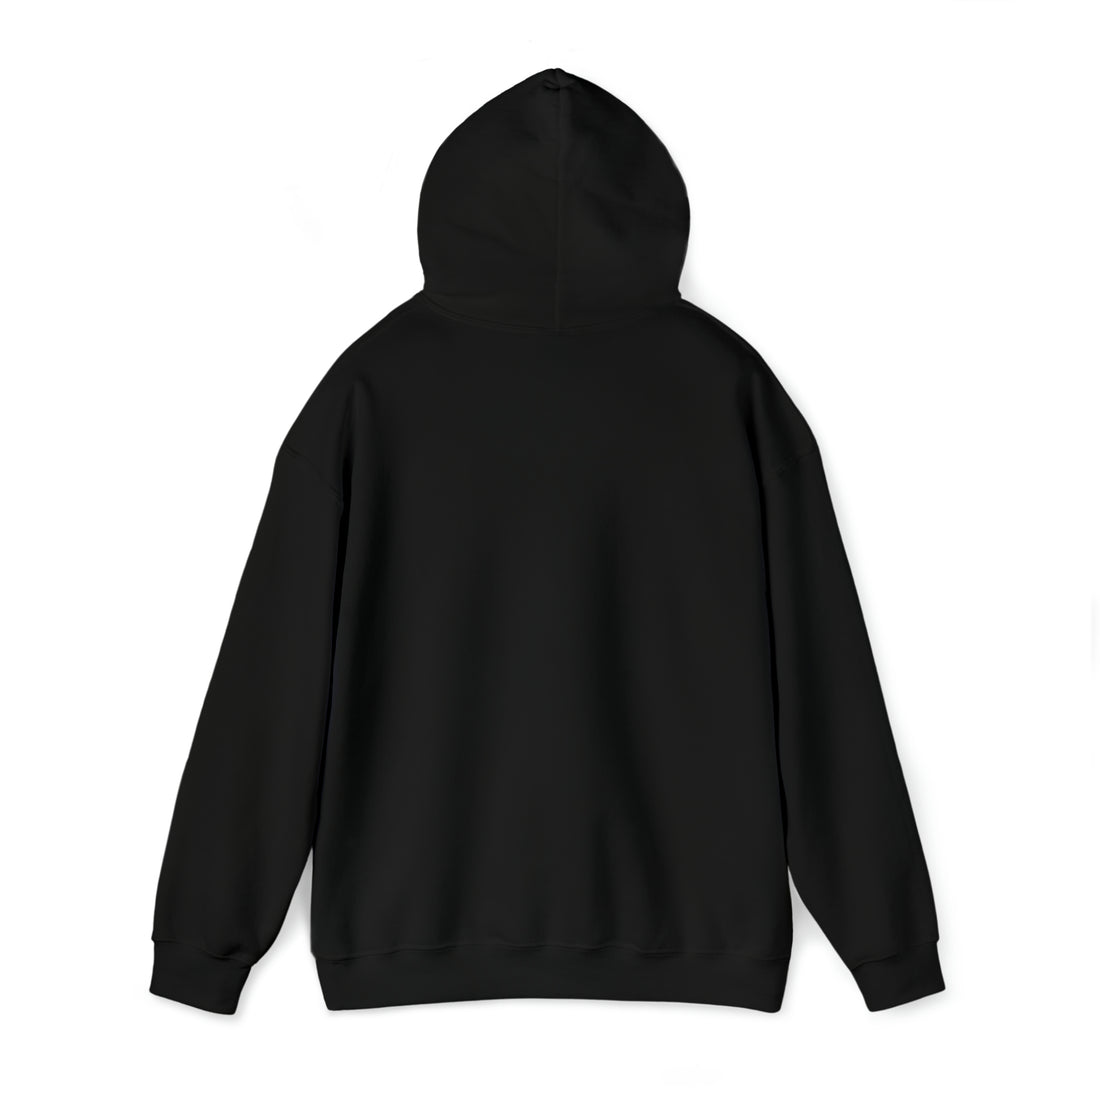 Support the Artist Hoodie, Unisex Heavy Hooded Sweatshirt